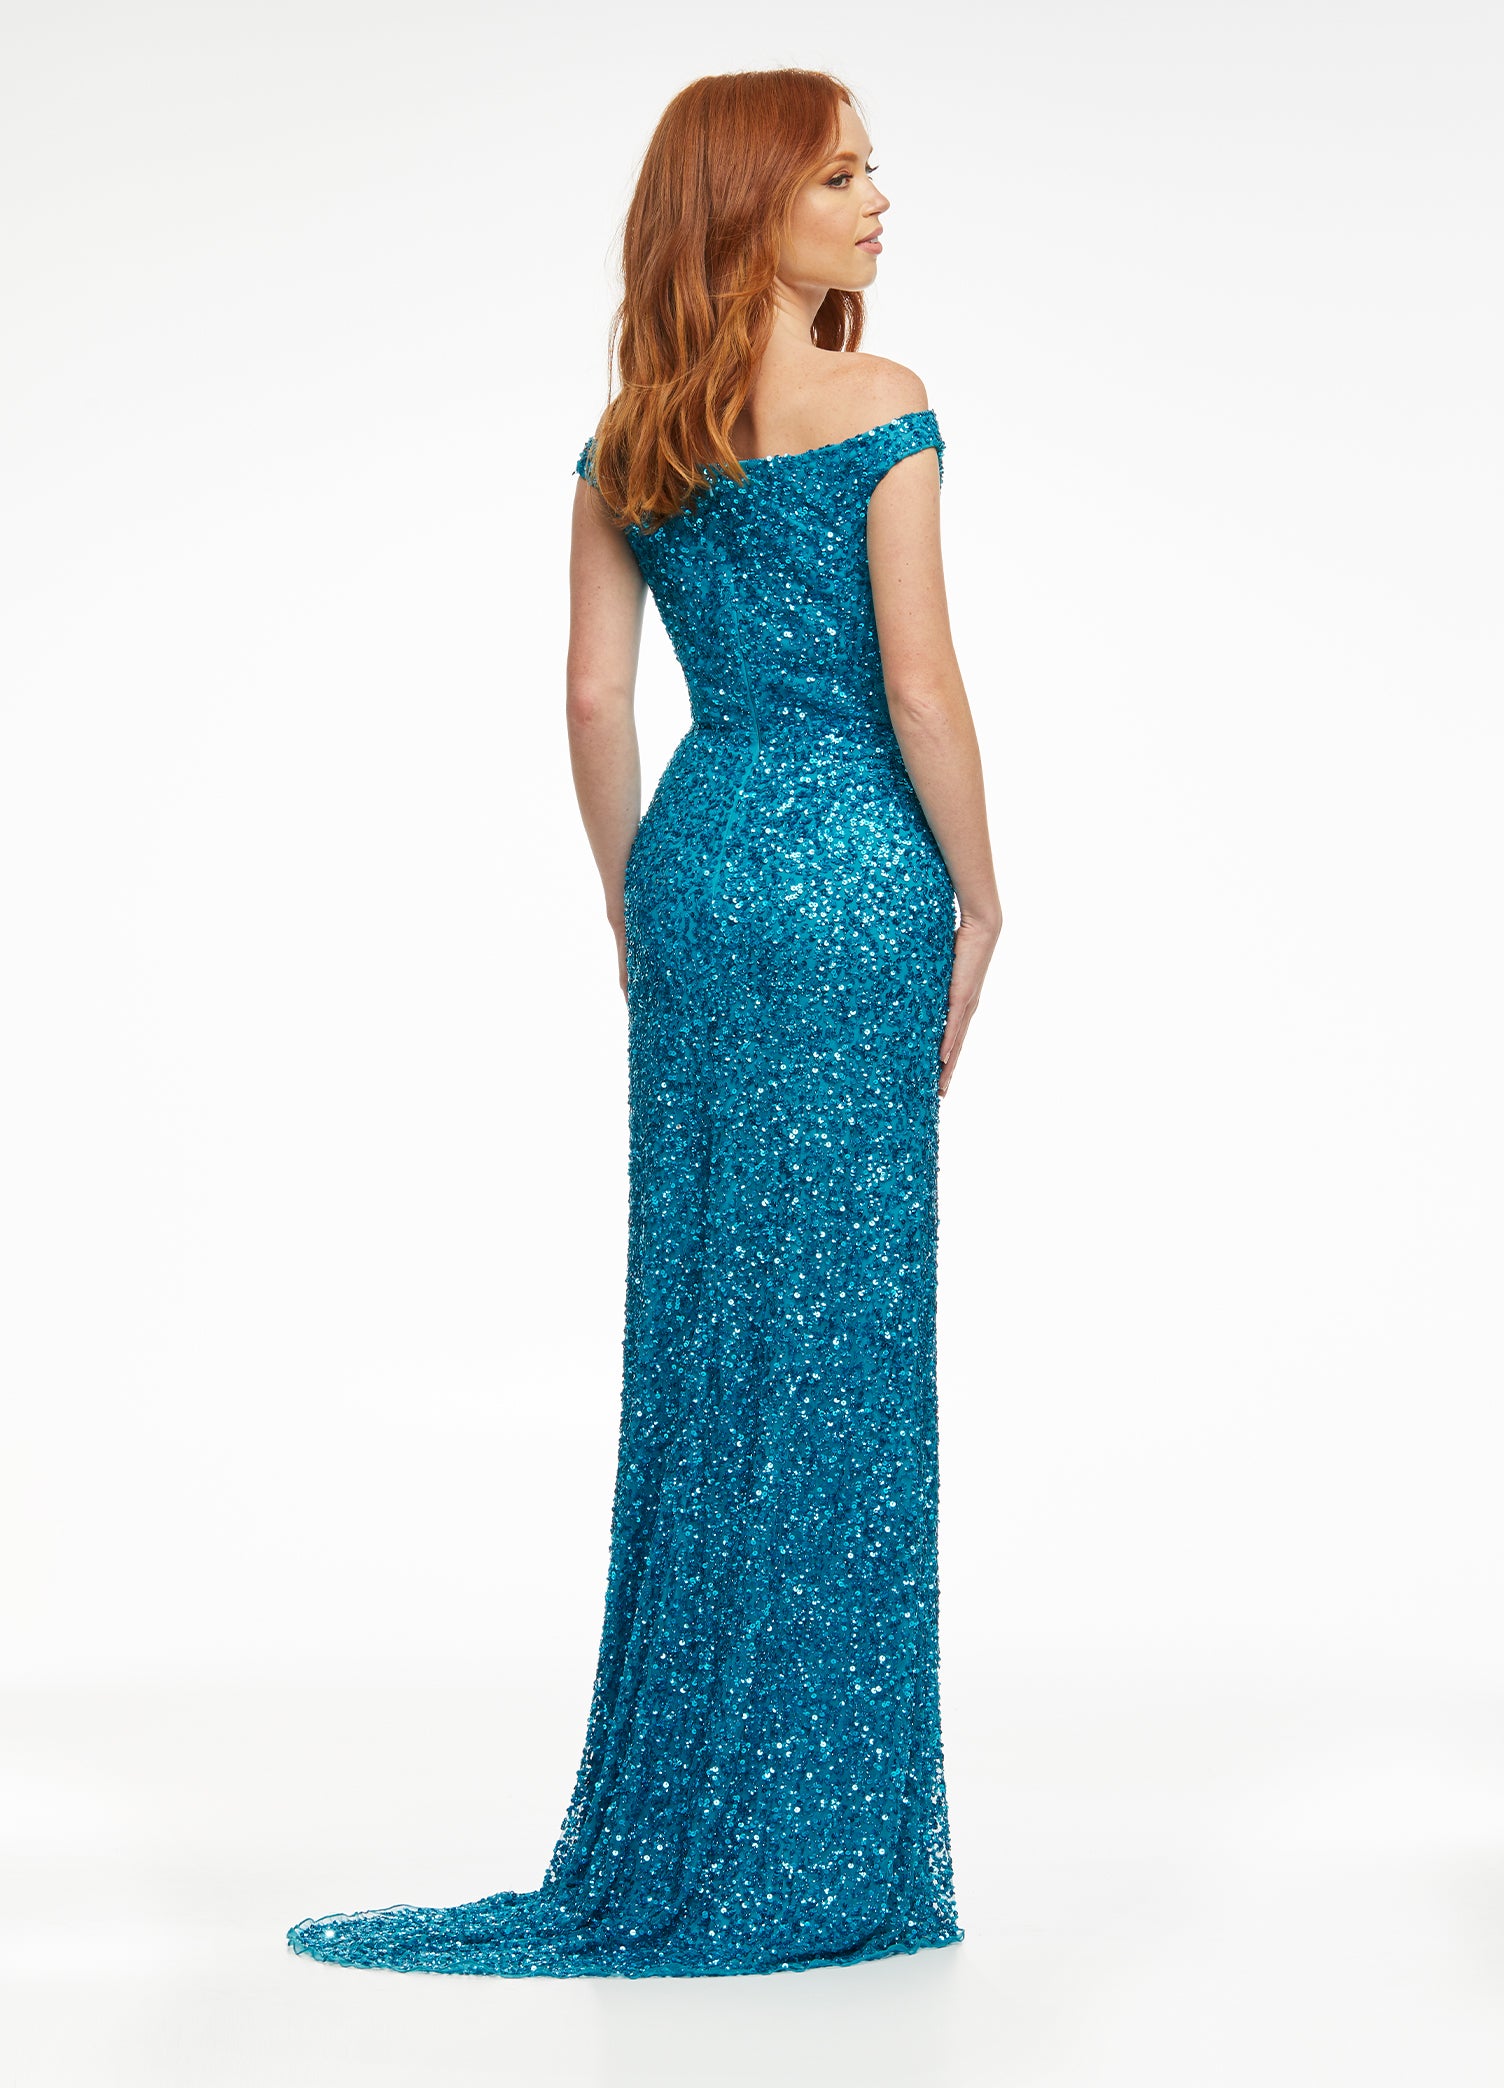 Ashley-Lauren-11067-turquoise-prom-dress-back-off-the-shoulder-straps-sequined-long-dress-right-side-slit-sweeping-train